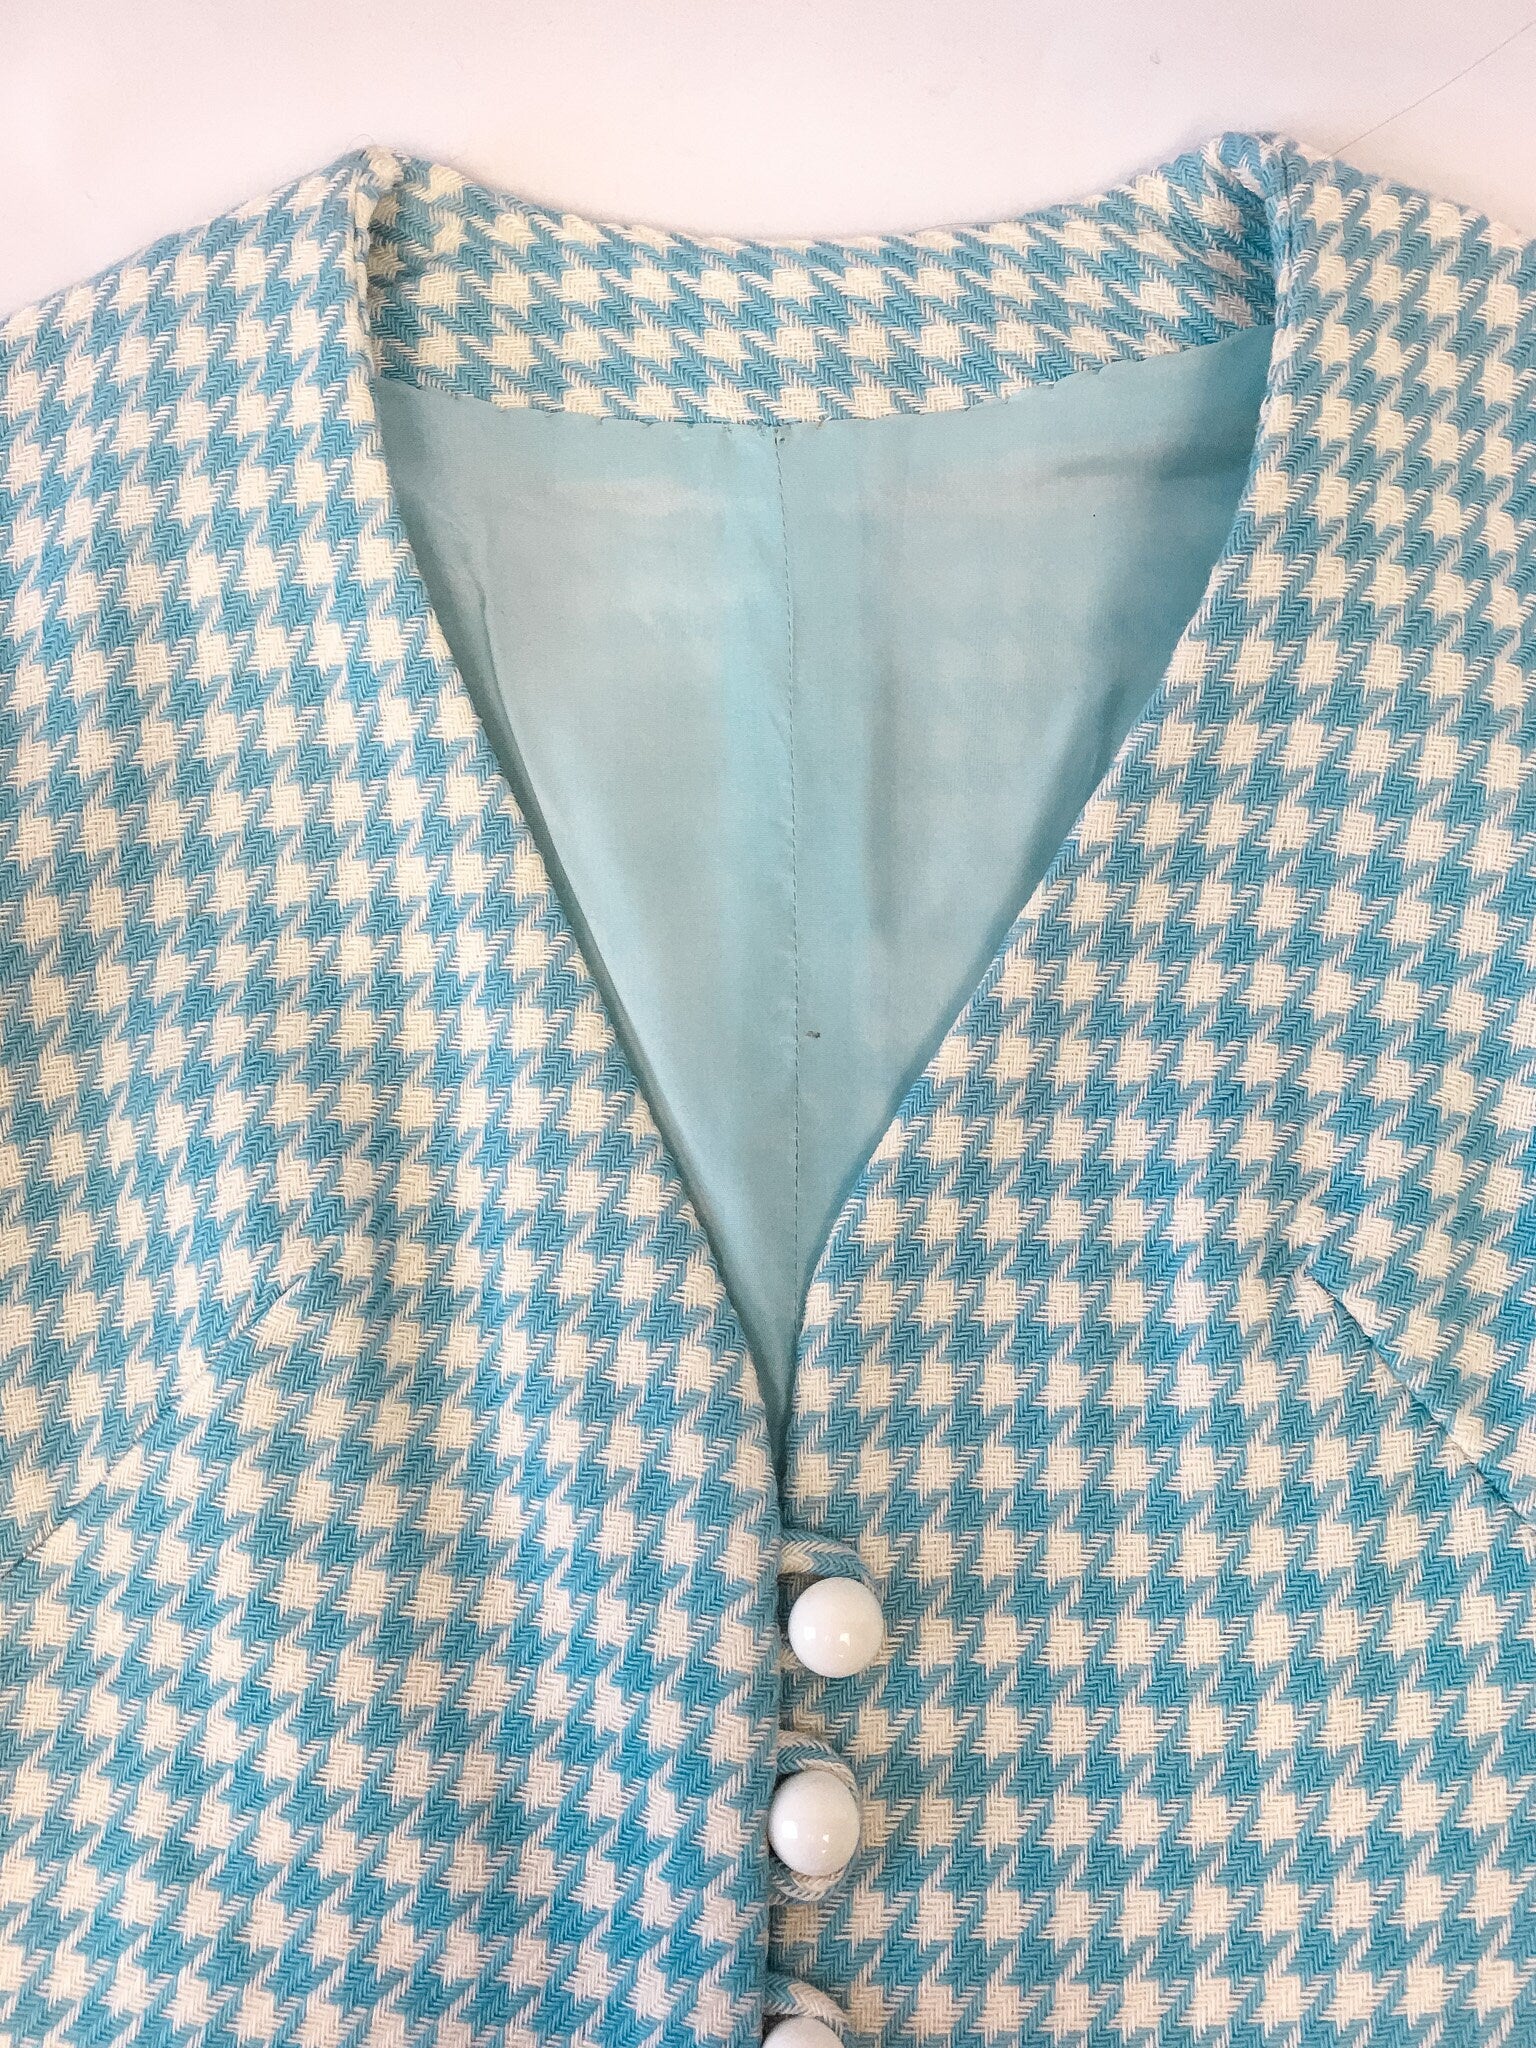 Handmade Vintage 60s/70s Baby Blue Houndstooth Patterned Long Coat, Vintage 60s/70s Overcoat Jacket